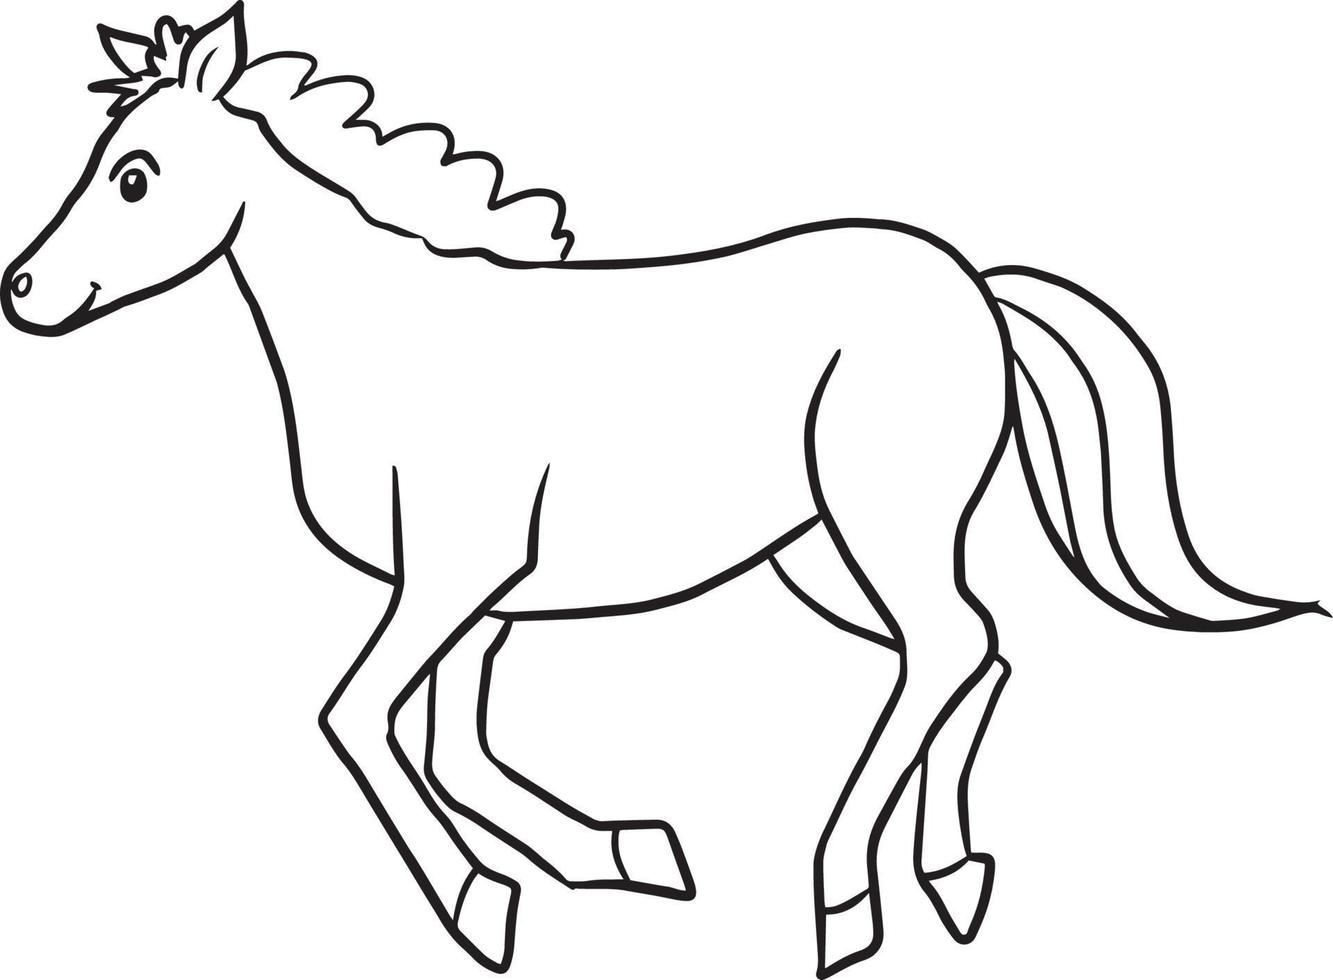 horse animal cartoon doodle kawaii anime coloring page cute illustration clip art character vector